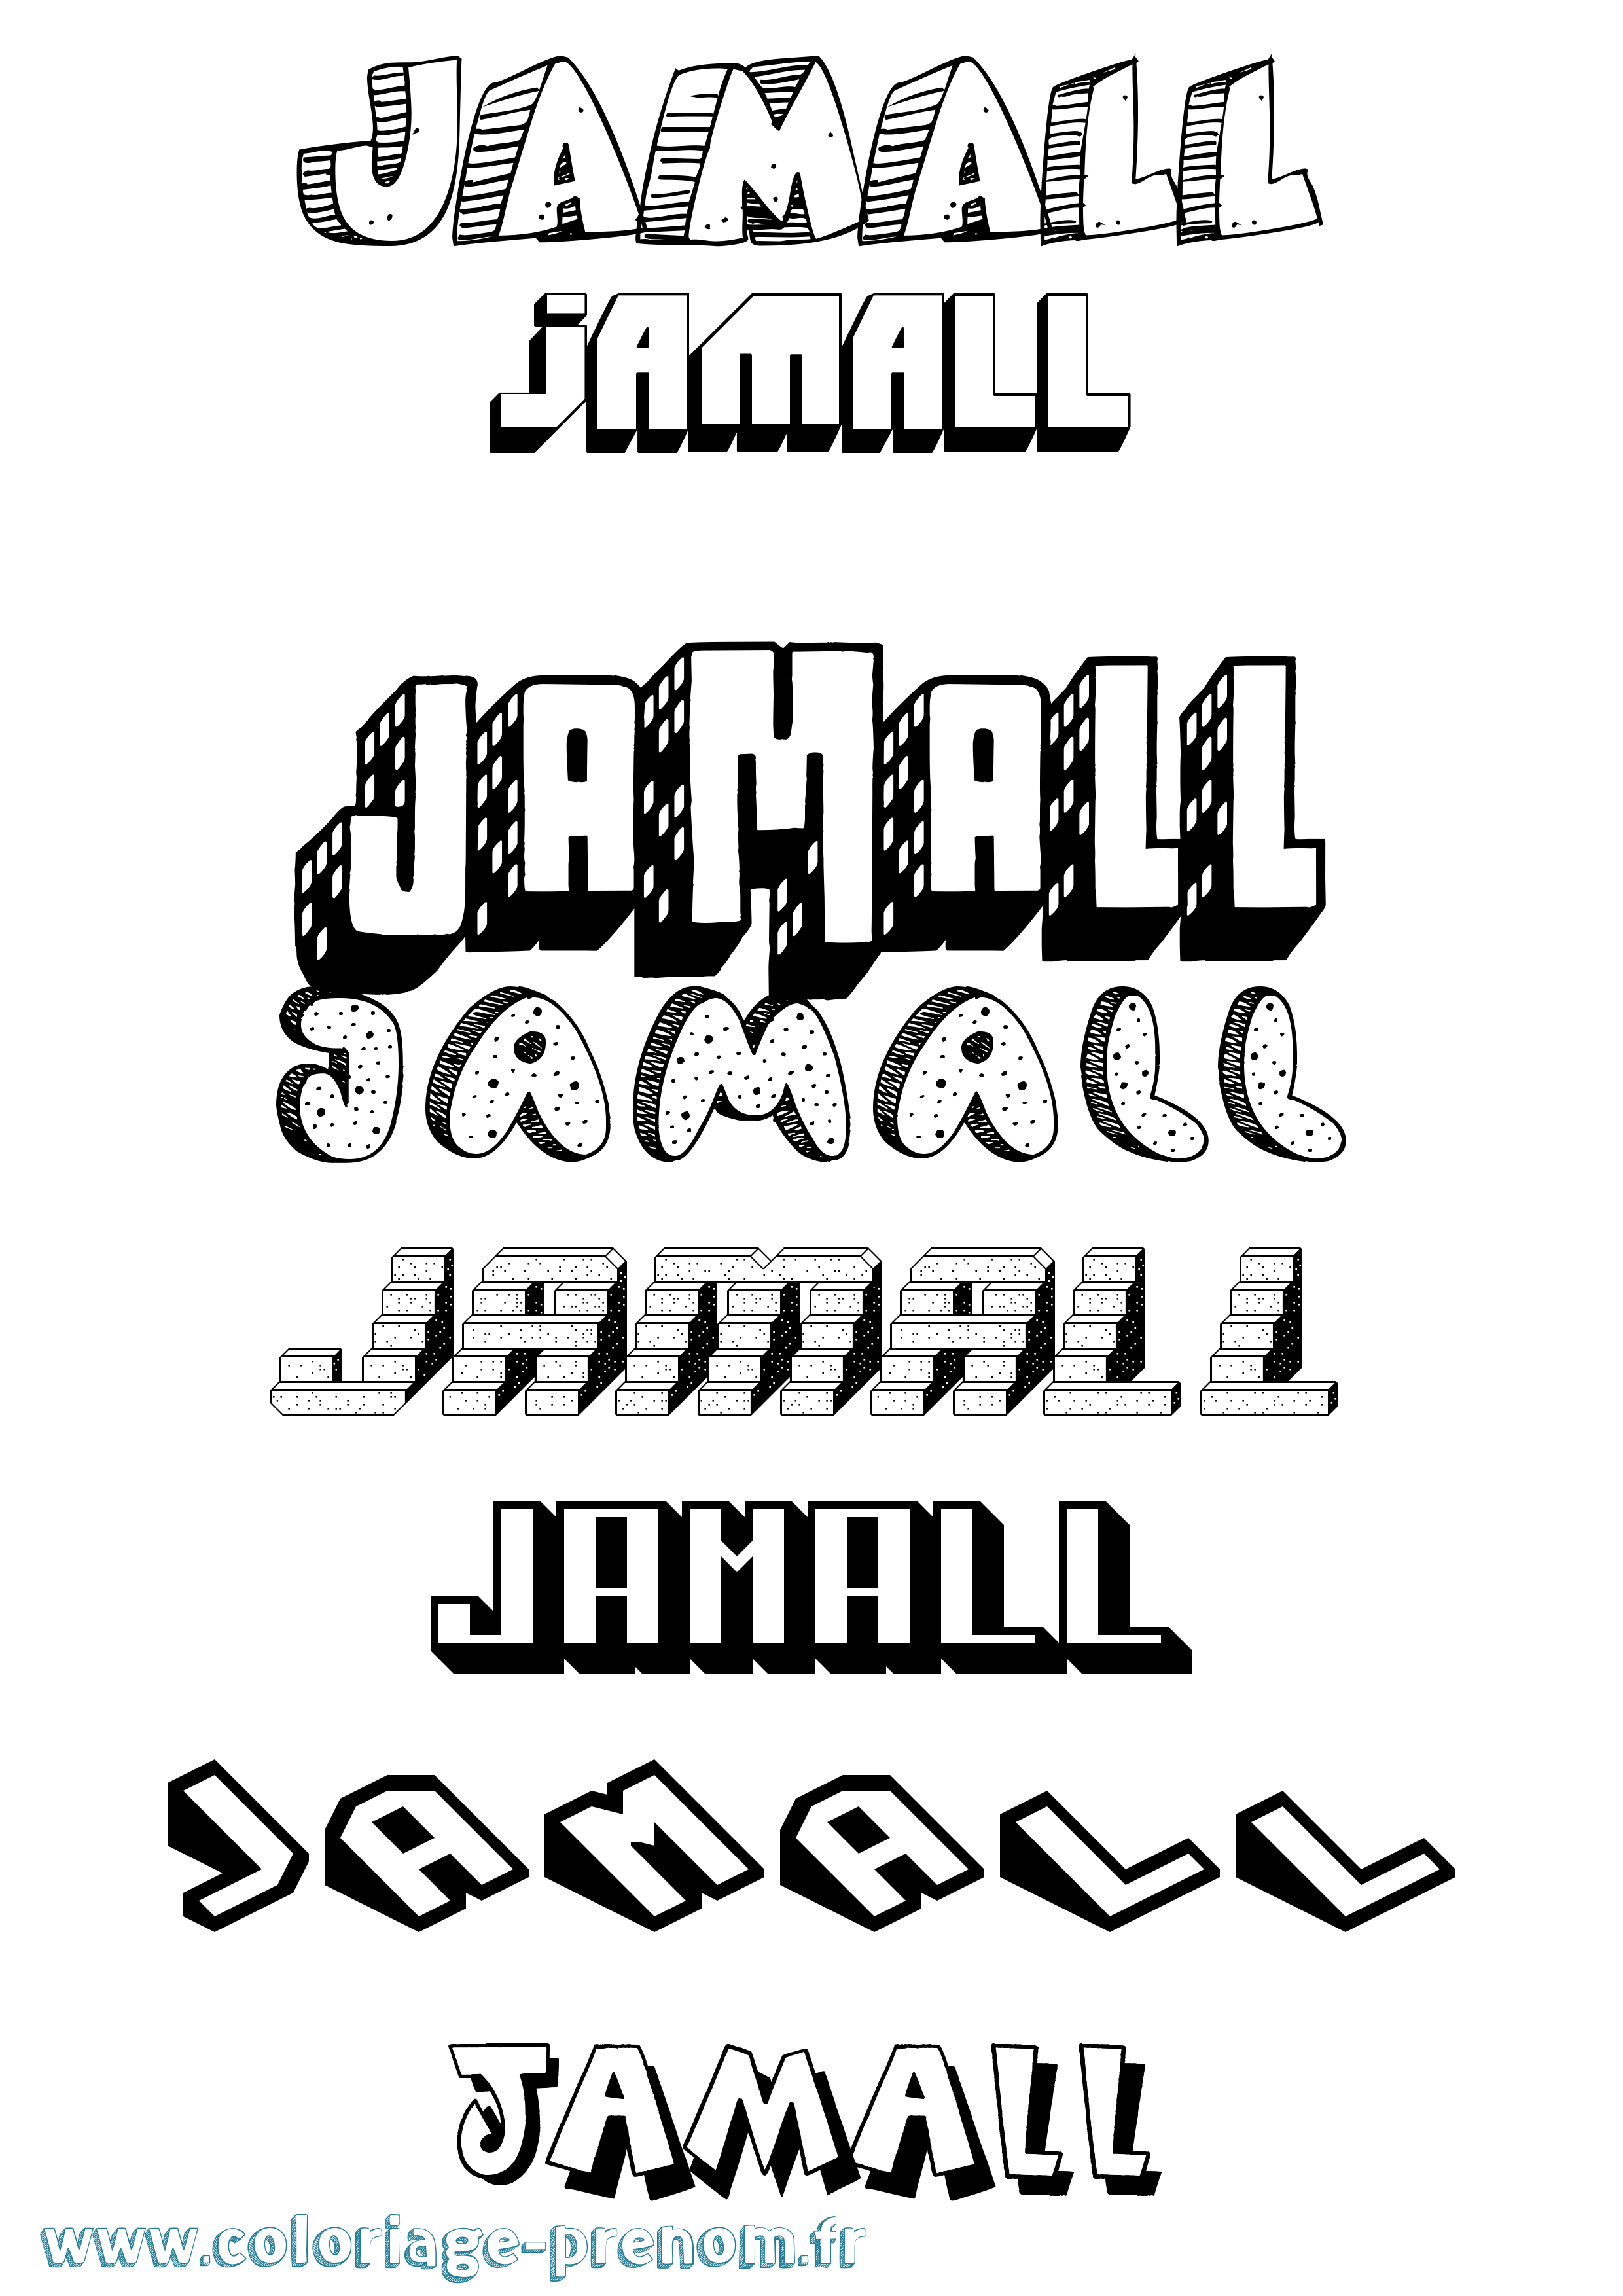 Coloriage prénom Jamall Effet 3D